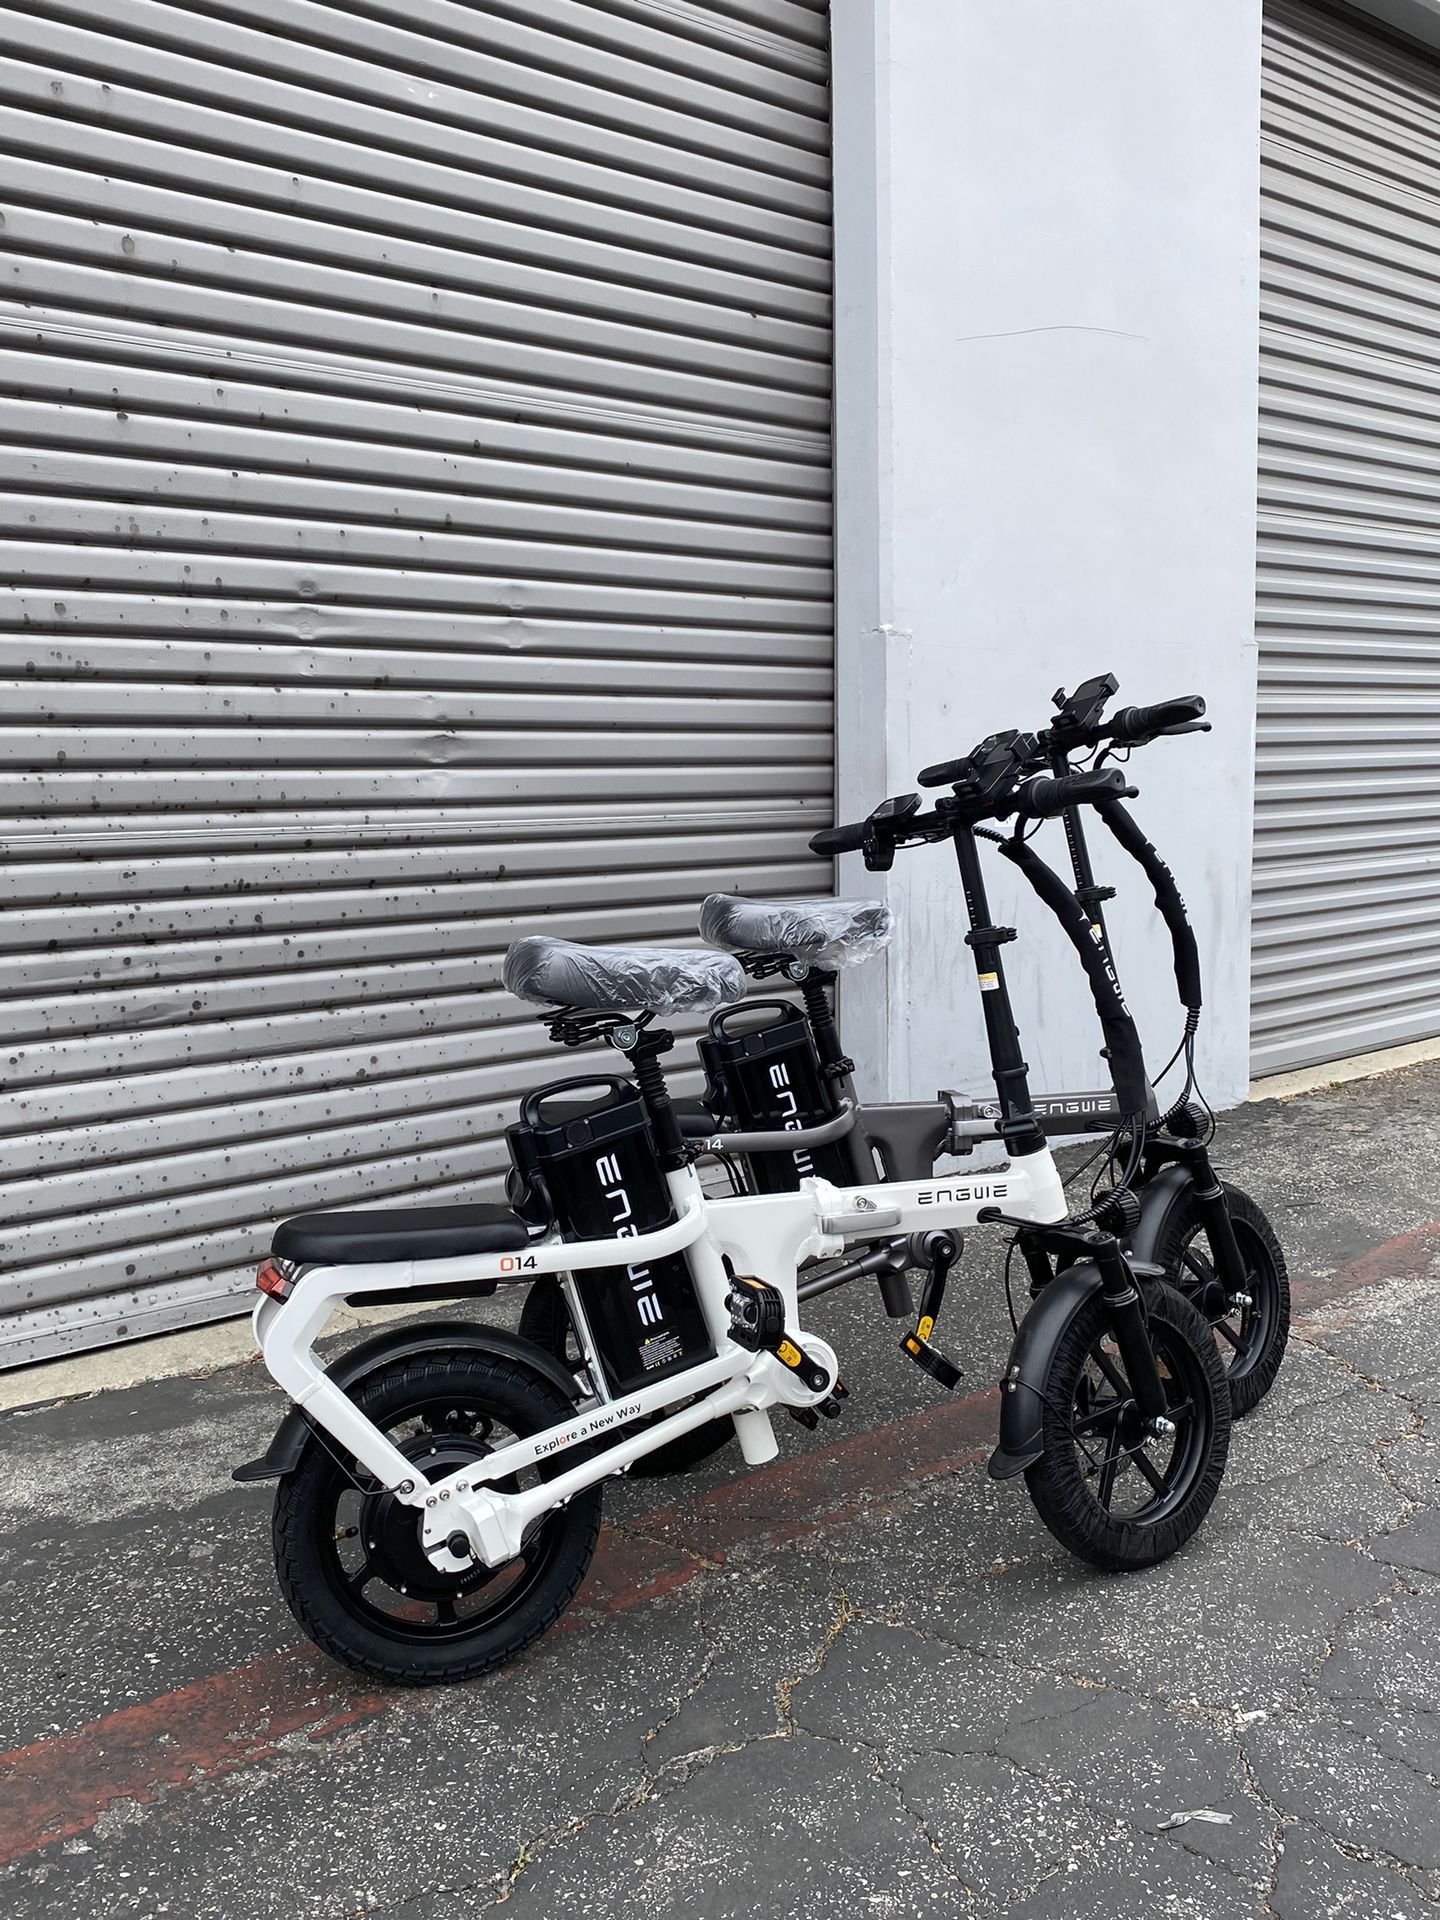 ENGWE O14, Shaft Drive Design (chainless) Mini Folding E-Bike for Adults Teens 14" Fat Tire 400W 15.6Ah Battery Max 20mph 50Miles Electric Bike